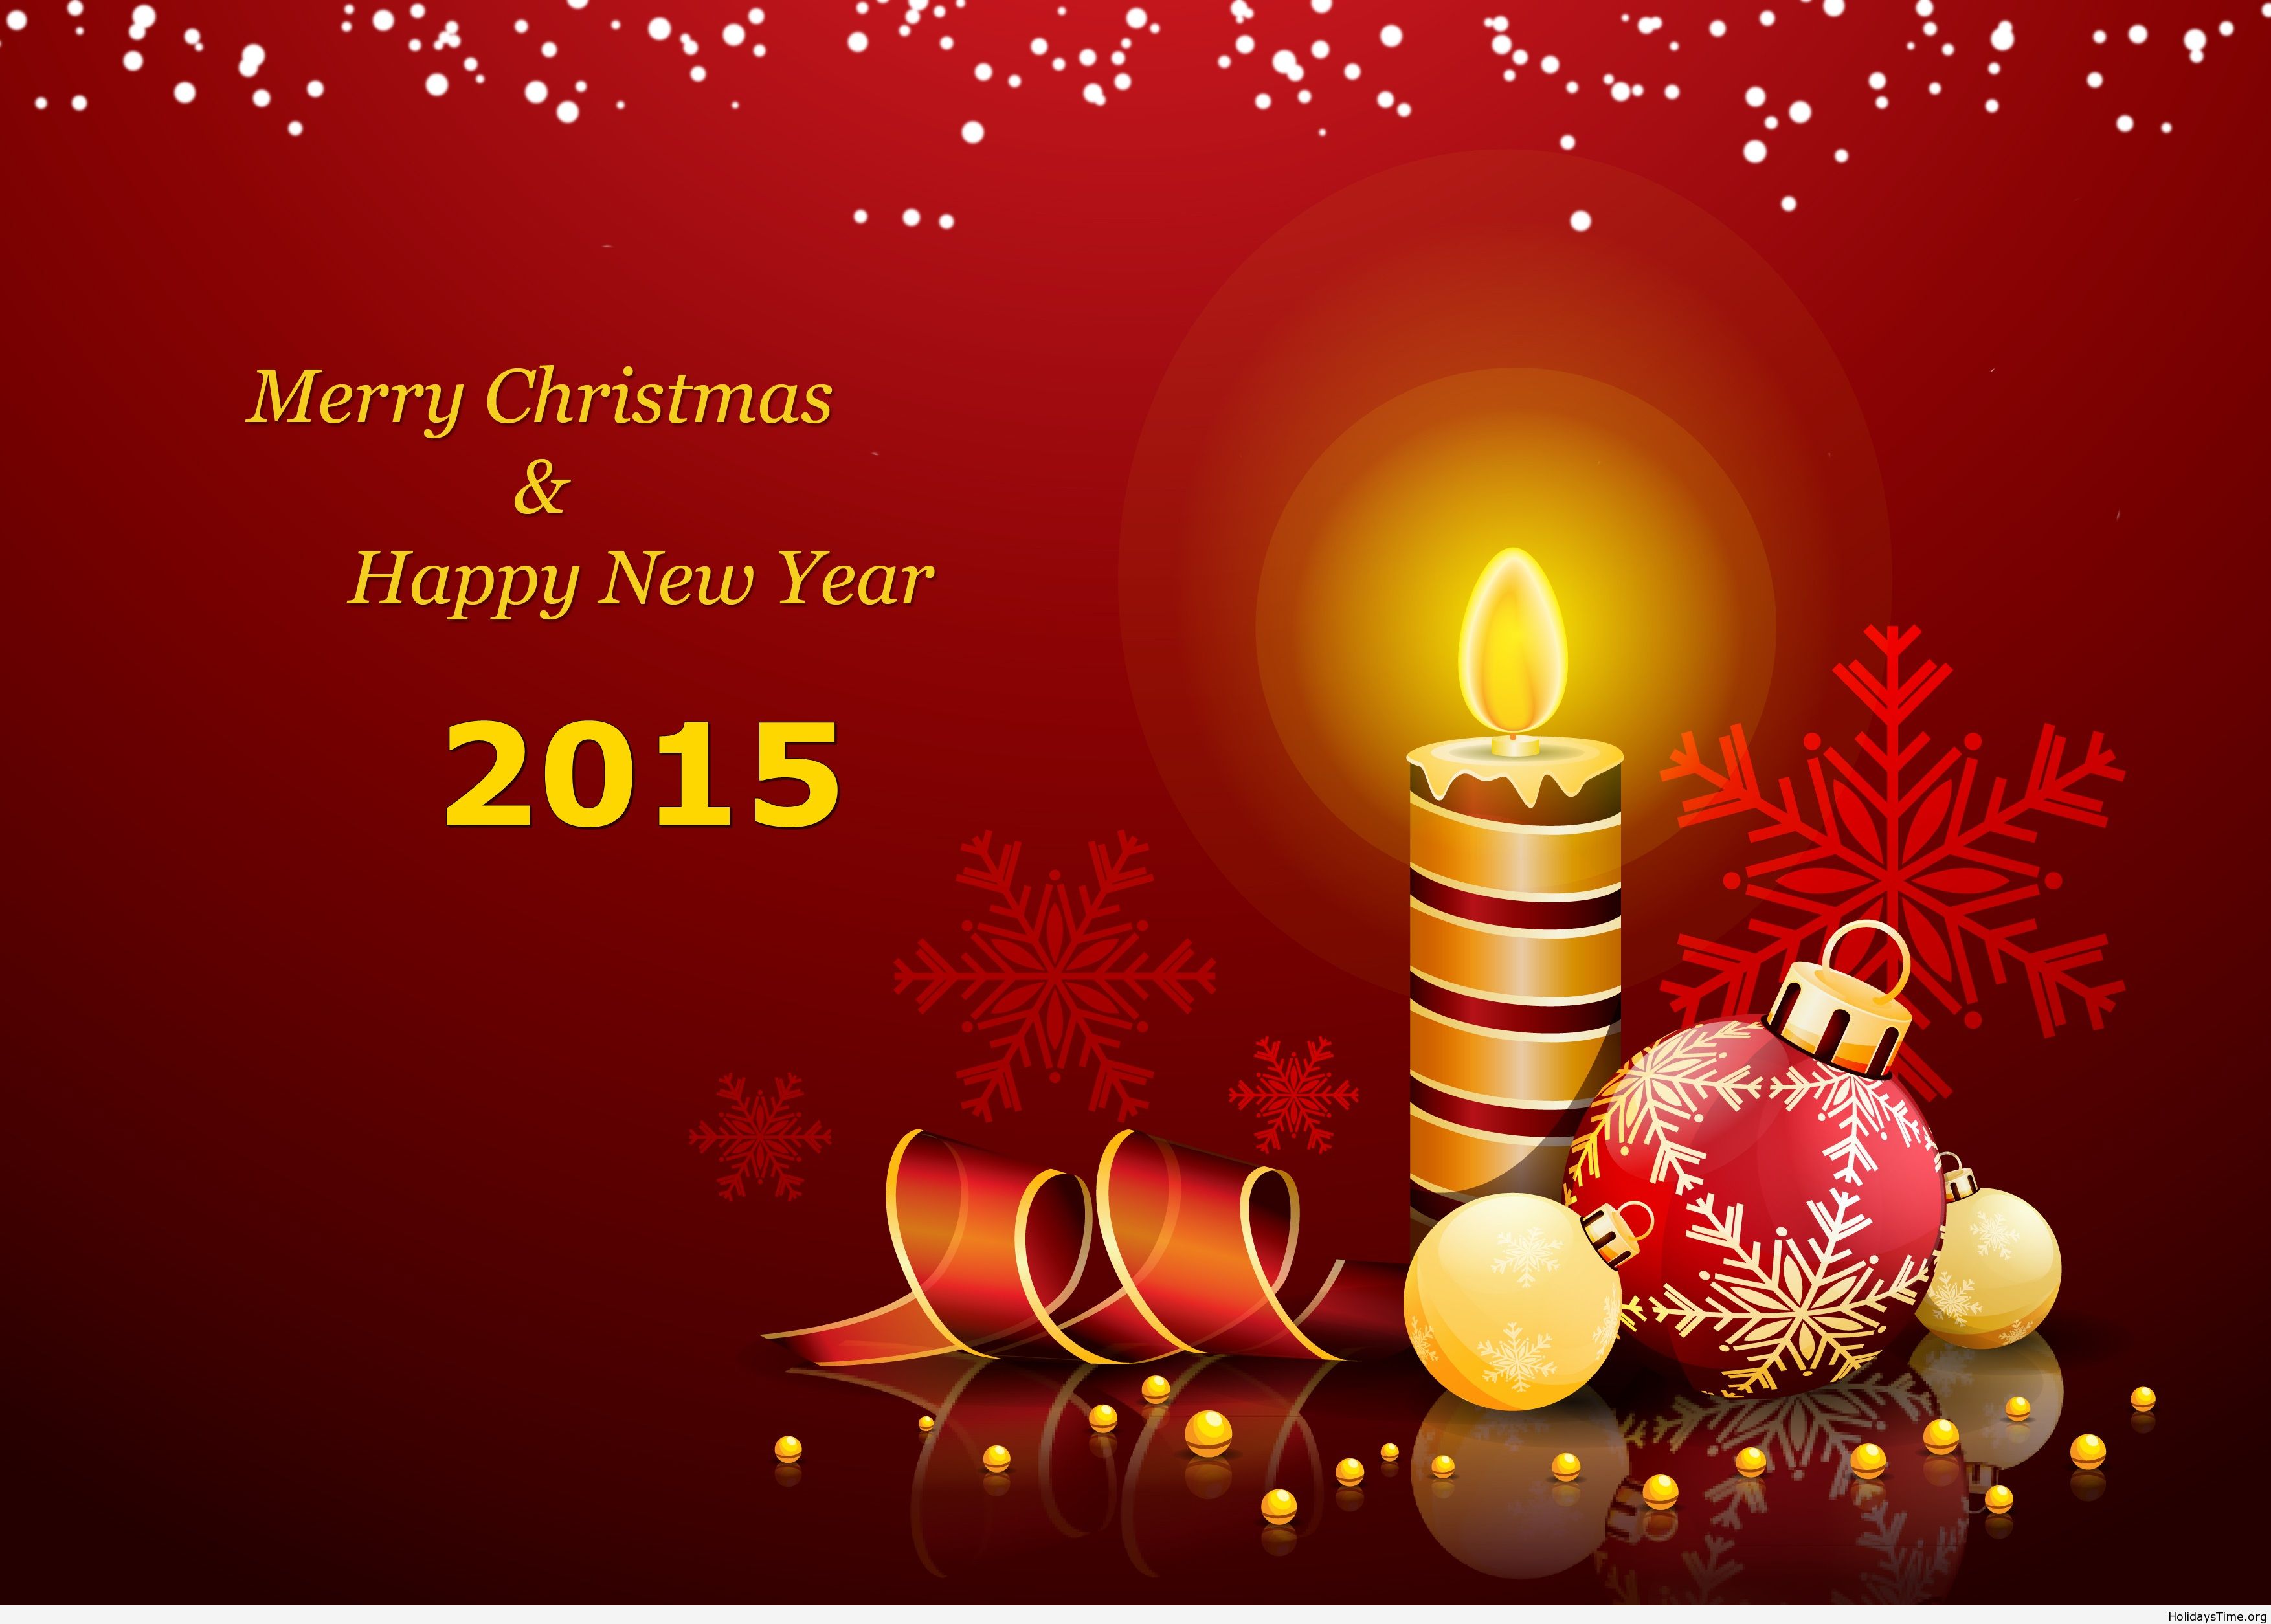 Merry Christmas 2015 Ecard